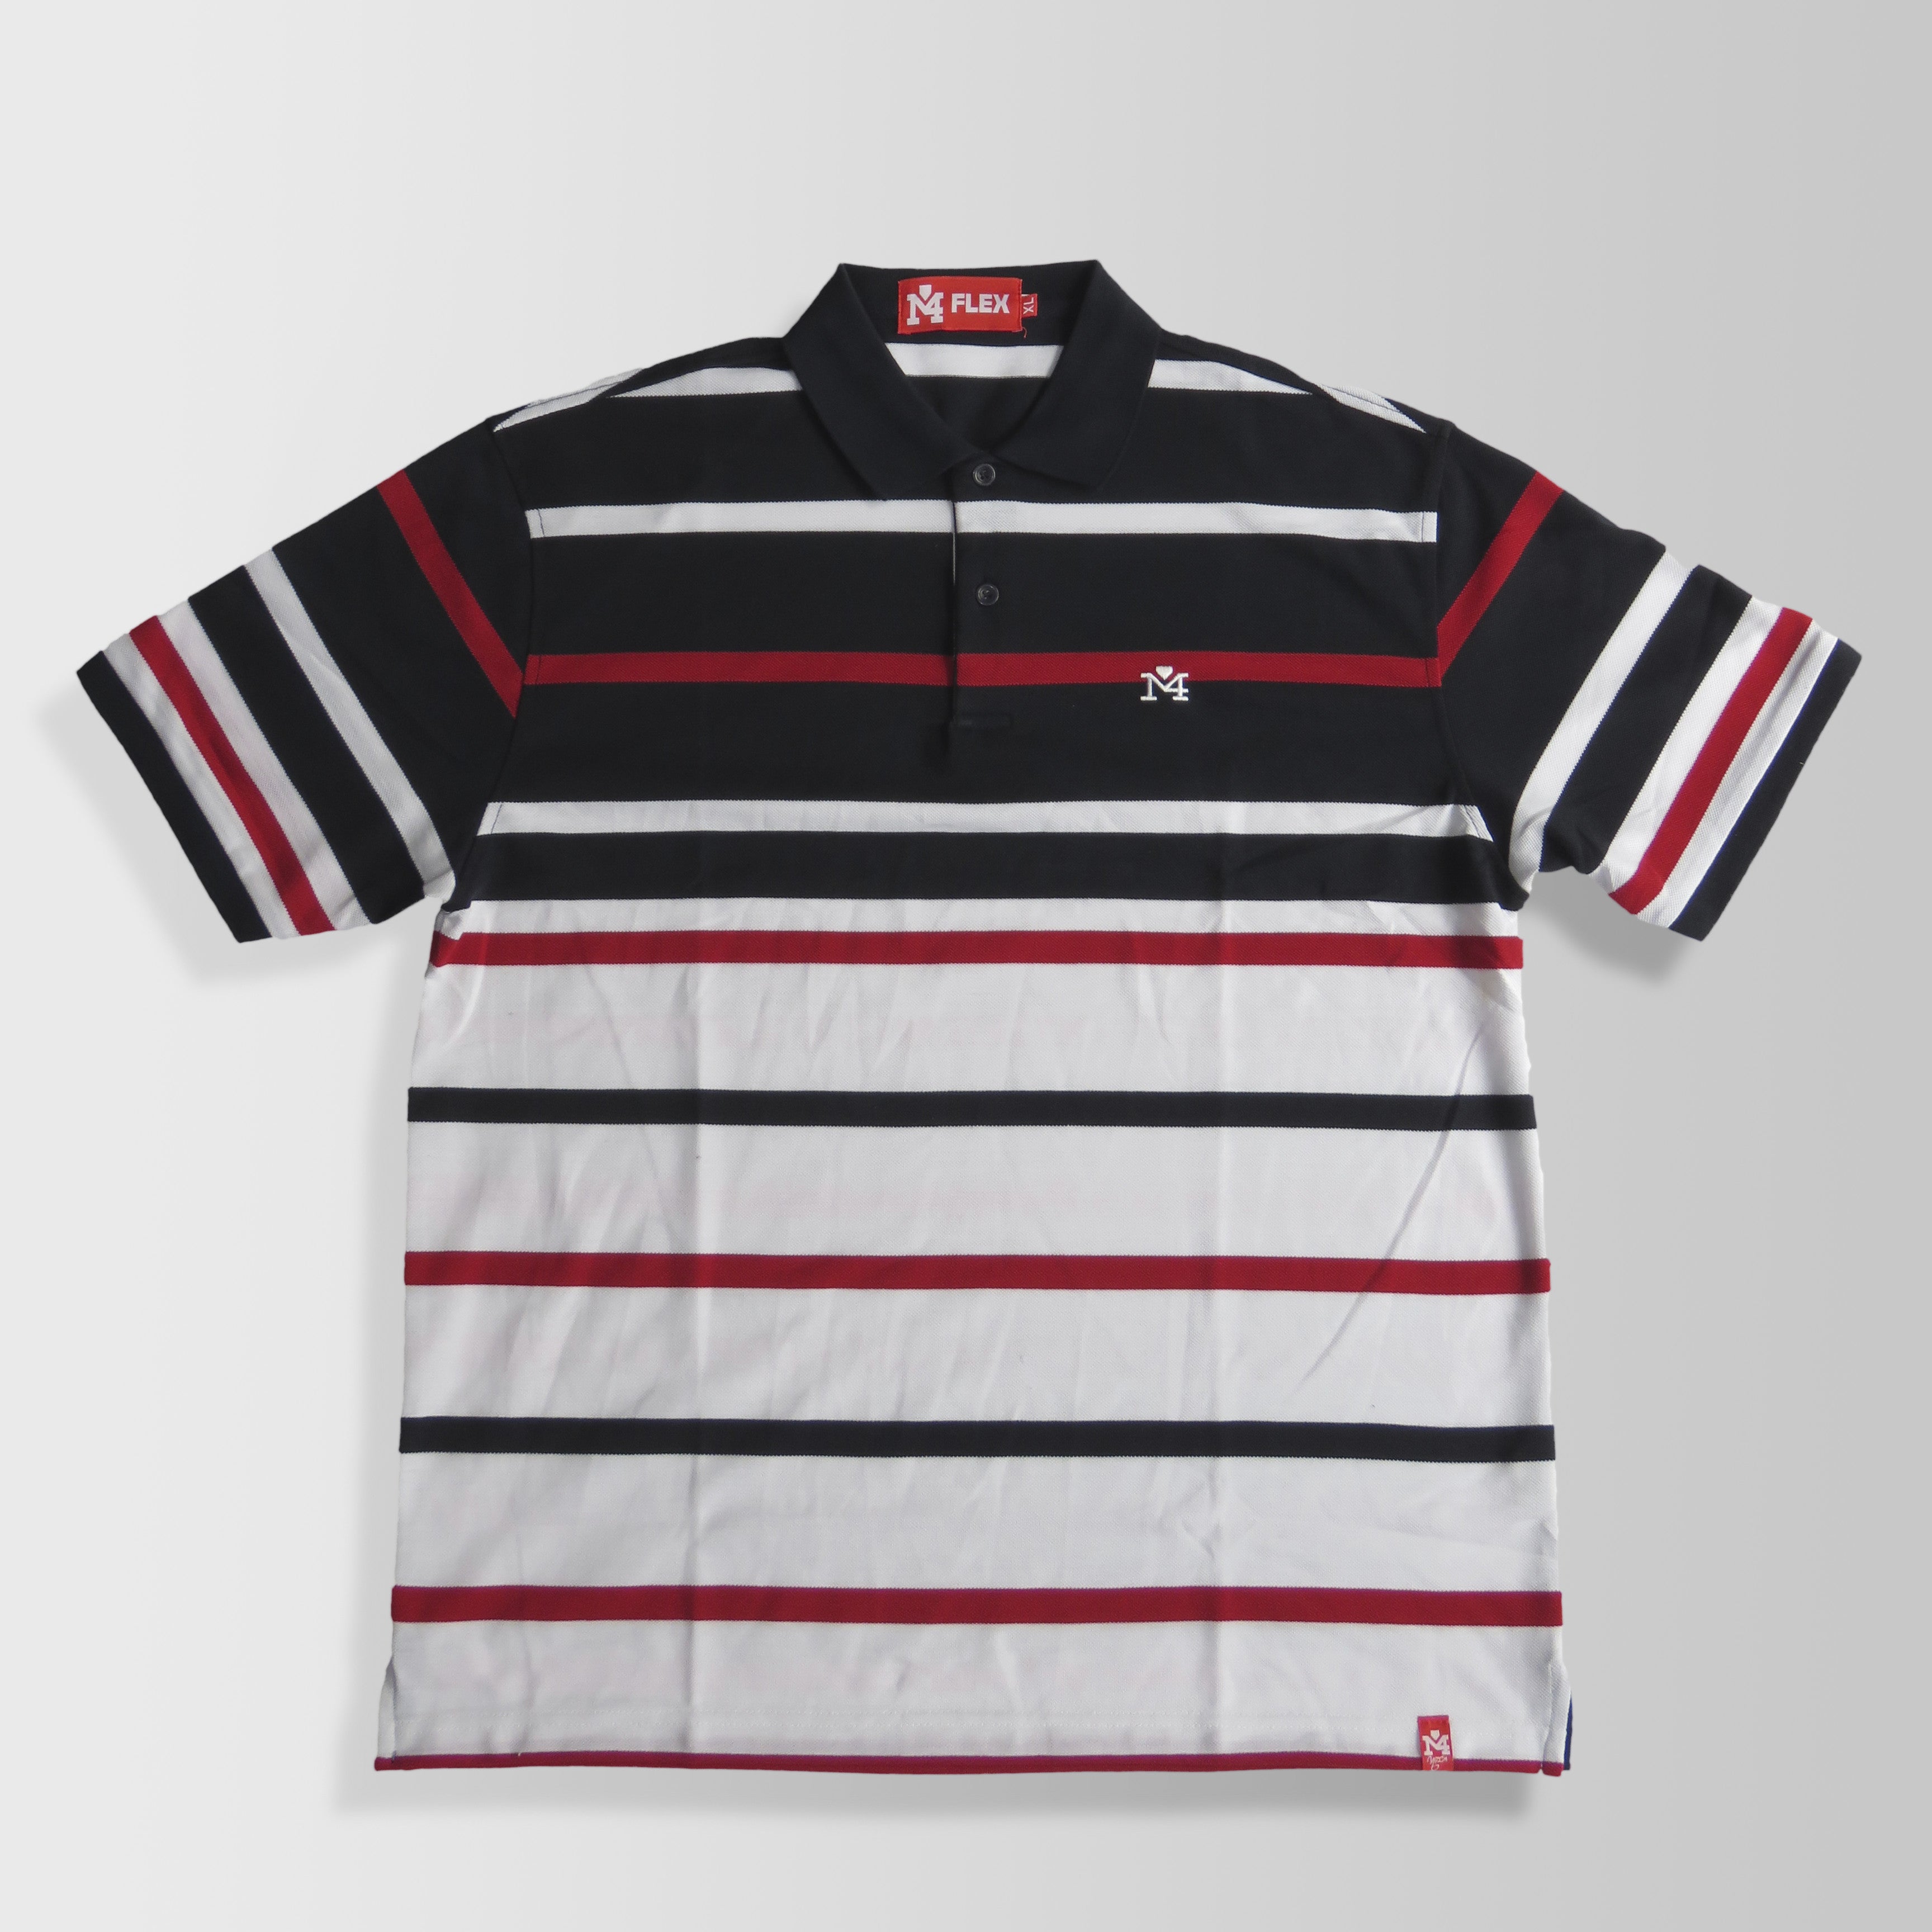 White Black Red Stripes Polo Shirt M4 By Yadi